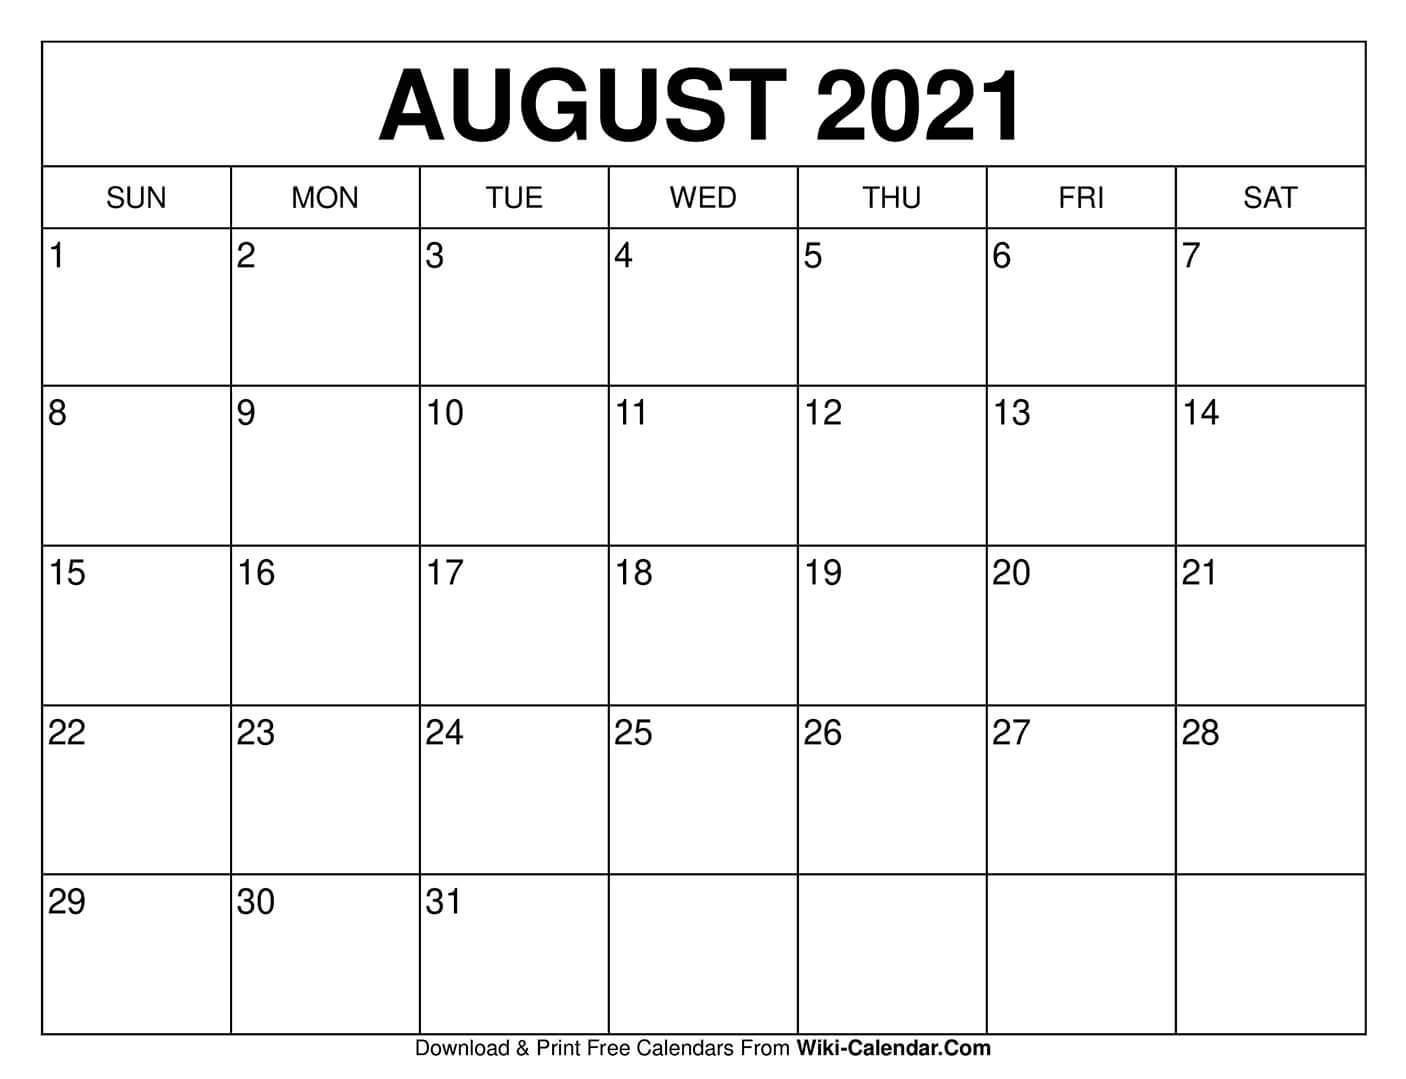 Get Calendar For August 2021 Printable